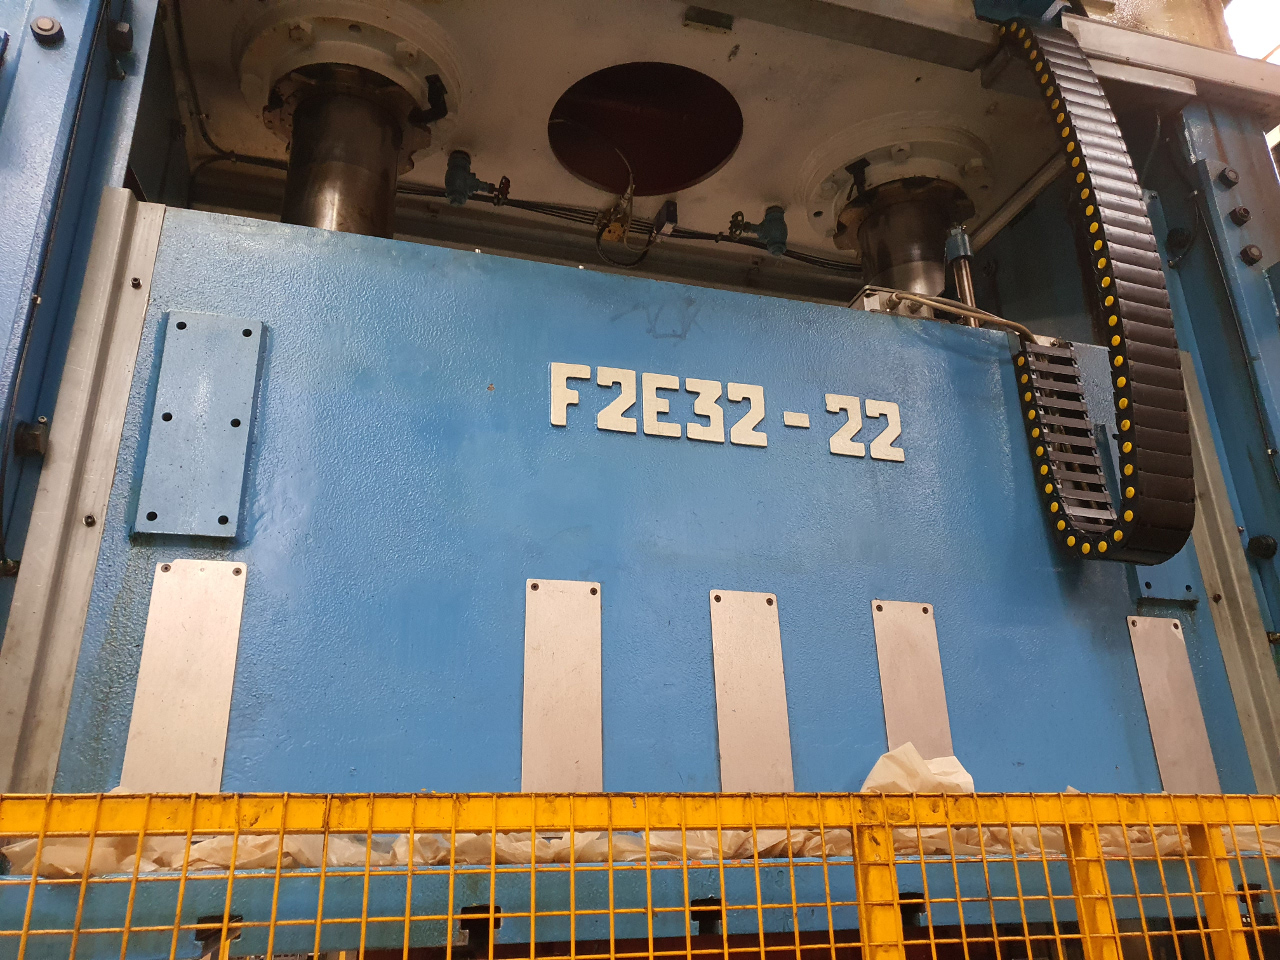 Spiertz 320 t hydraulic press PR2486, used